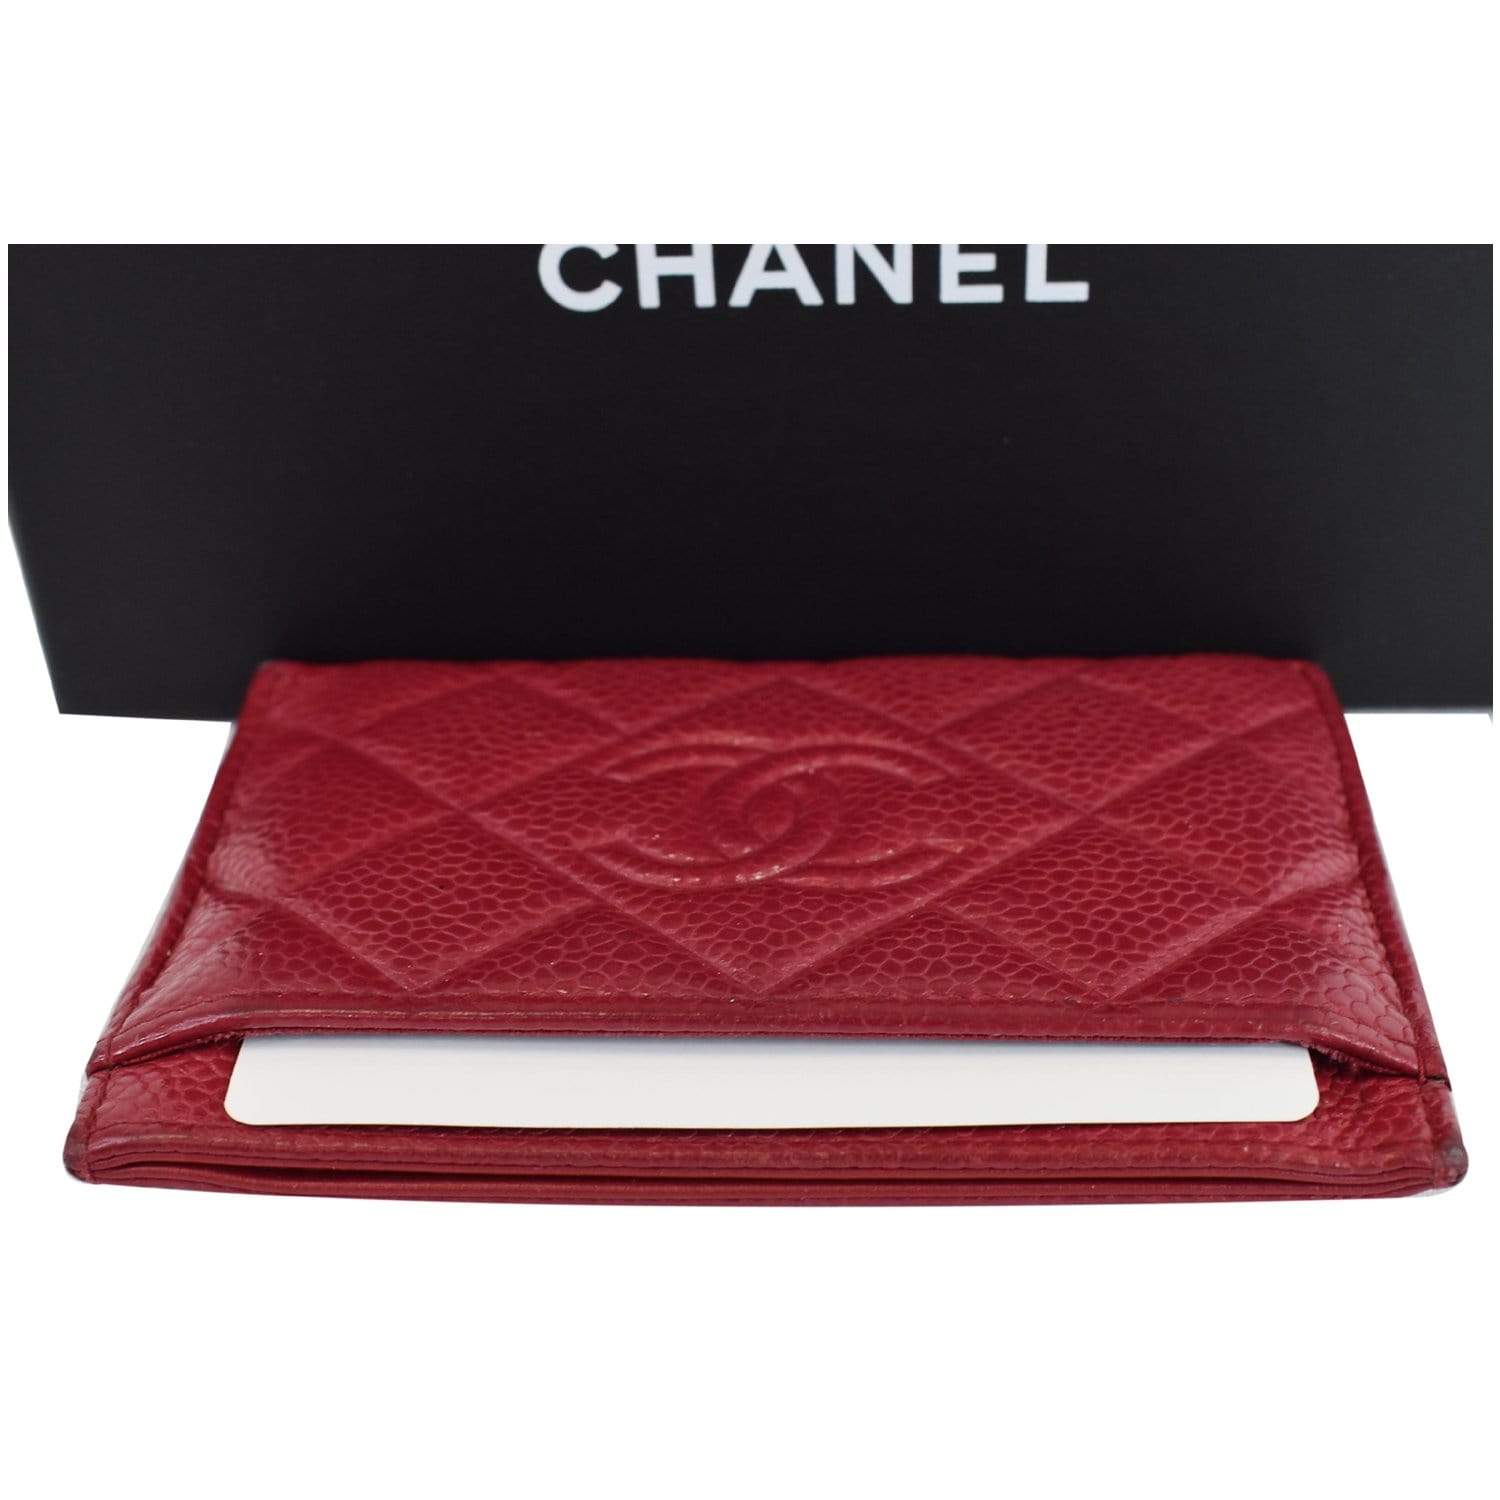 Chanel Cc Button Line Cavar 6 Key Holder Case 12cz1005 Pink Leather Clutch, Chanel